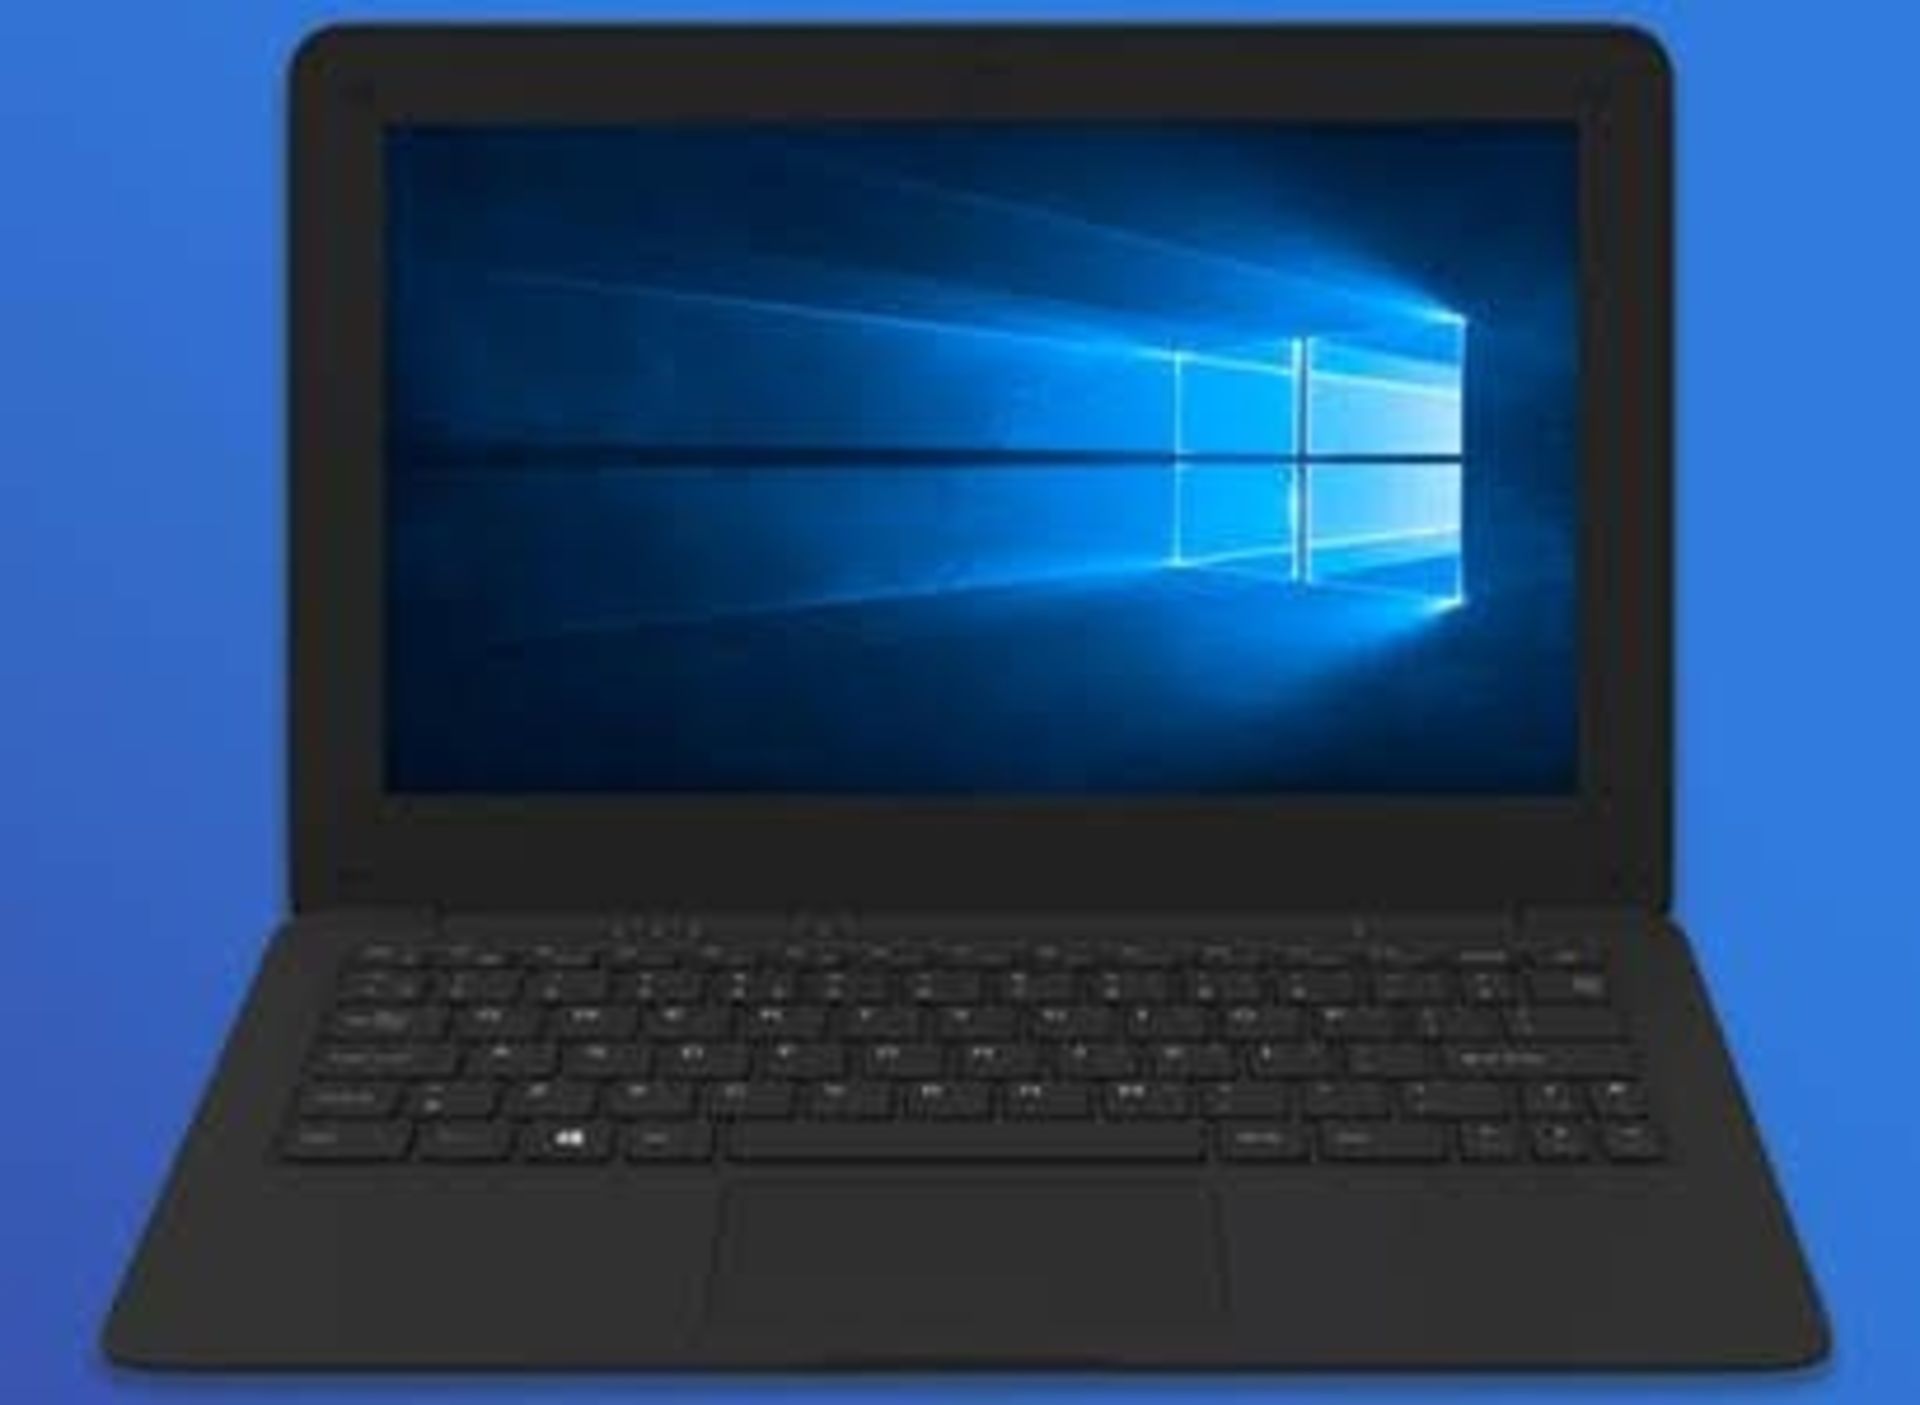 V Grade A/B 11.6" Notebook Laptop - Windows 10 Home - 2GB RAM - 32GB EMMC - Precision Touch Pad